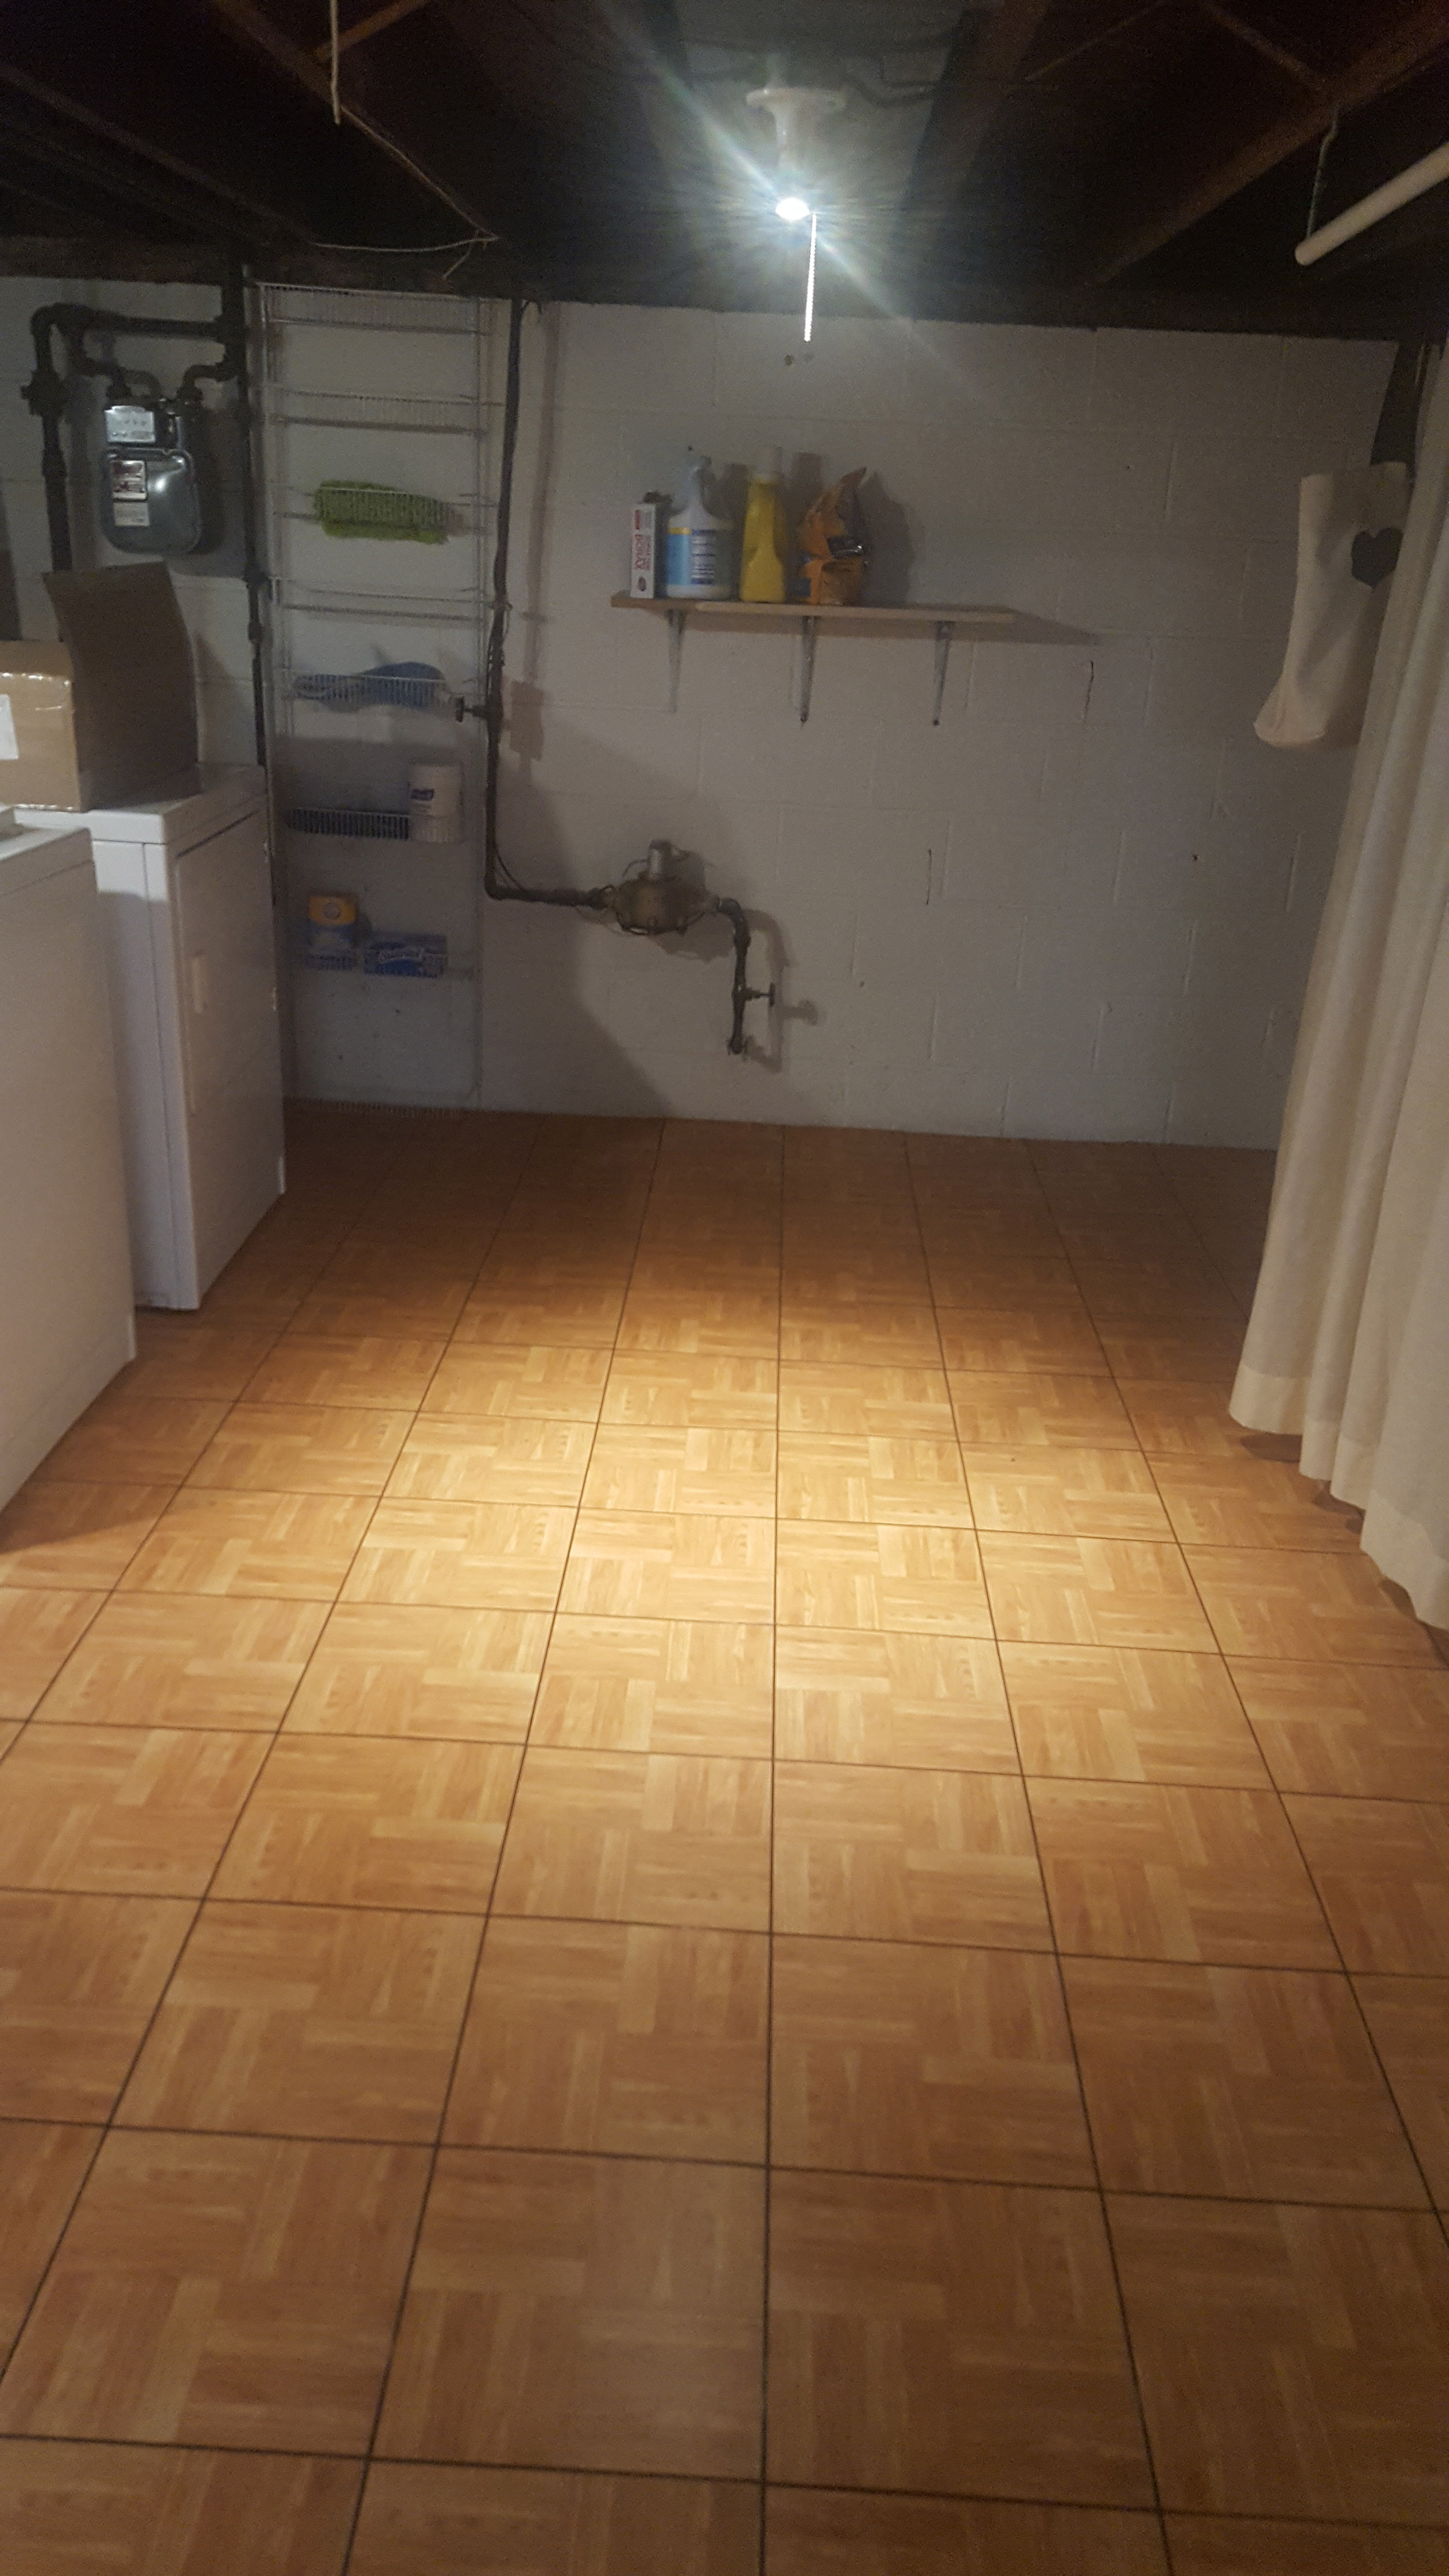 Basement Portable Floor Tile 5/8 Inch x 1x1 Ft. customer review photo 2